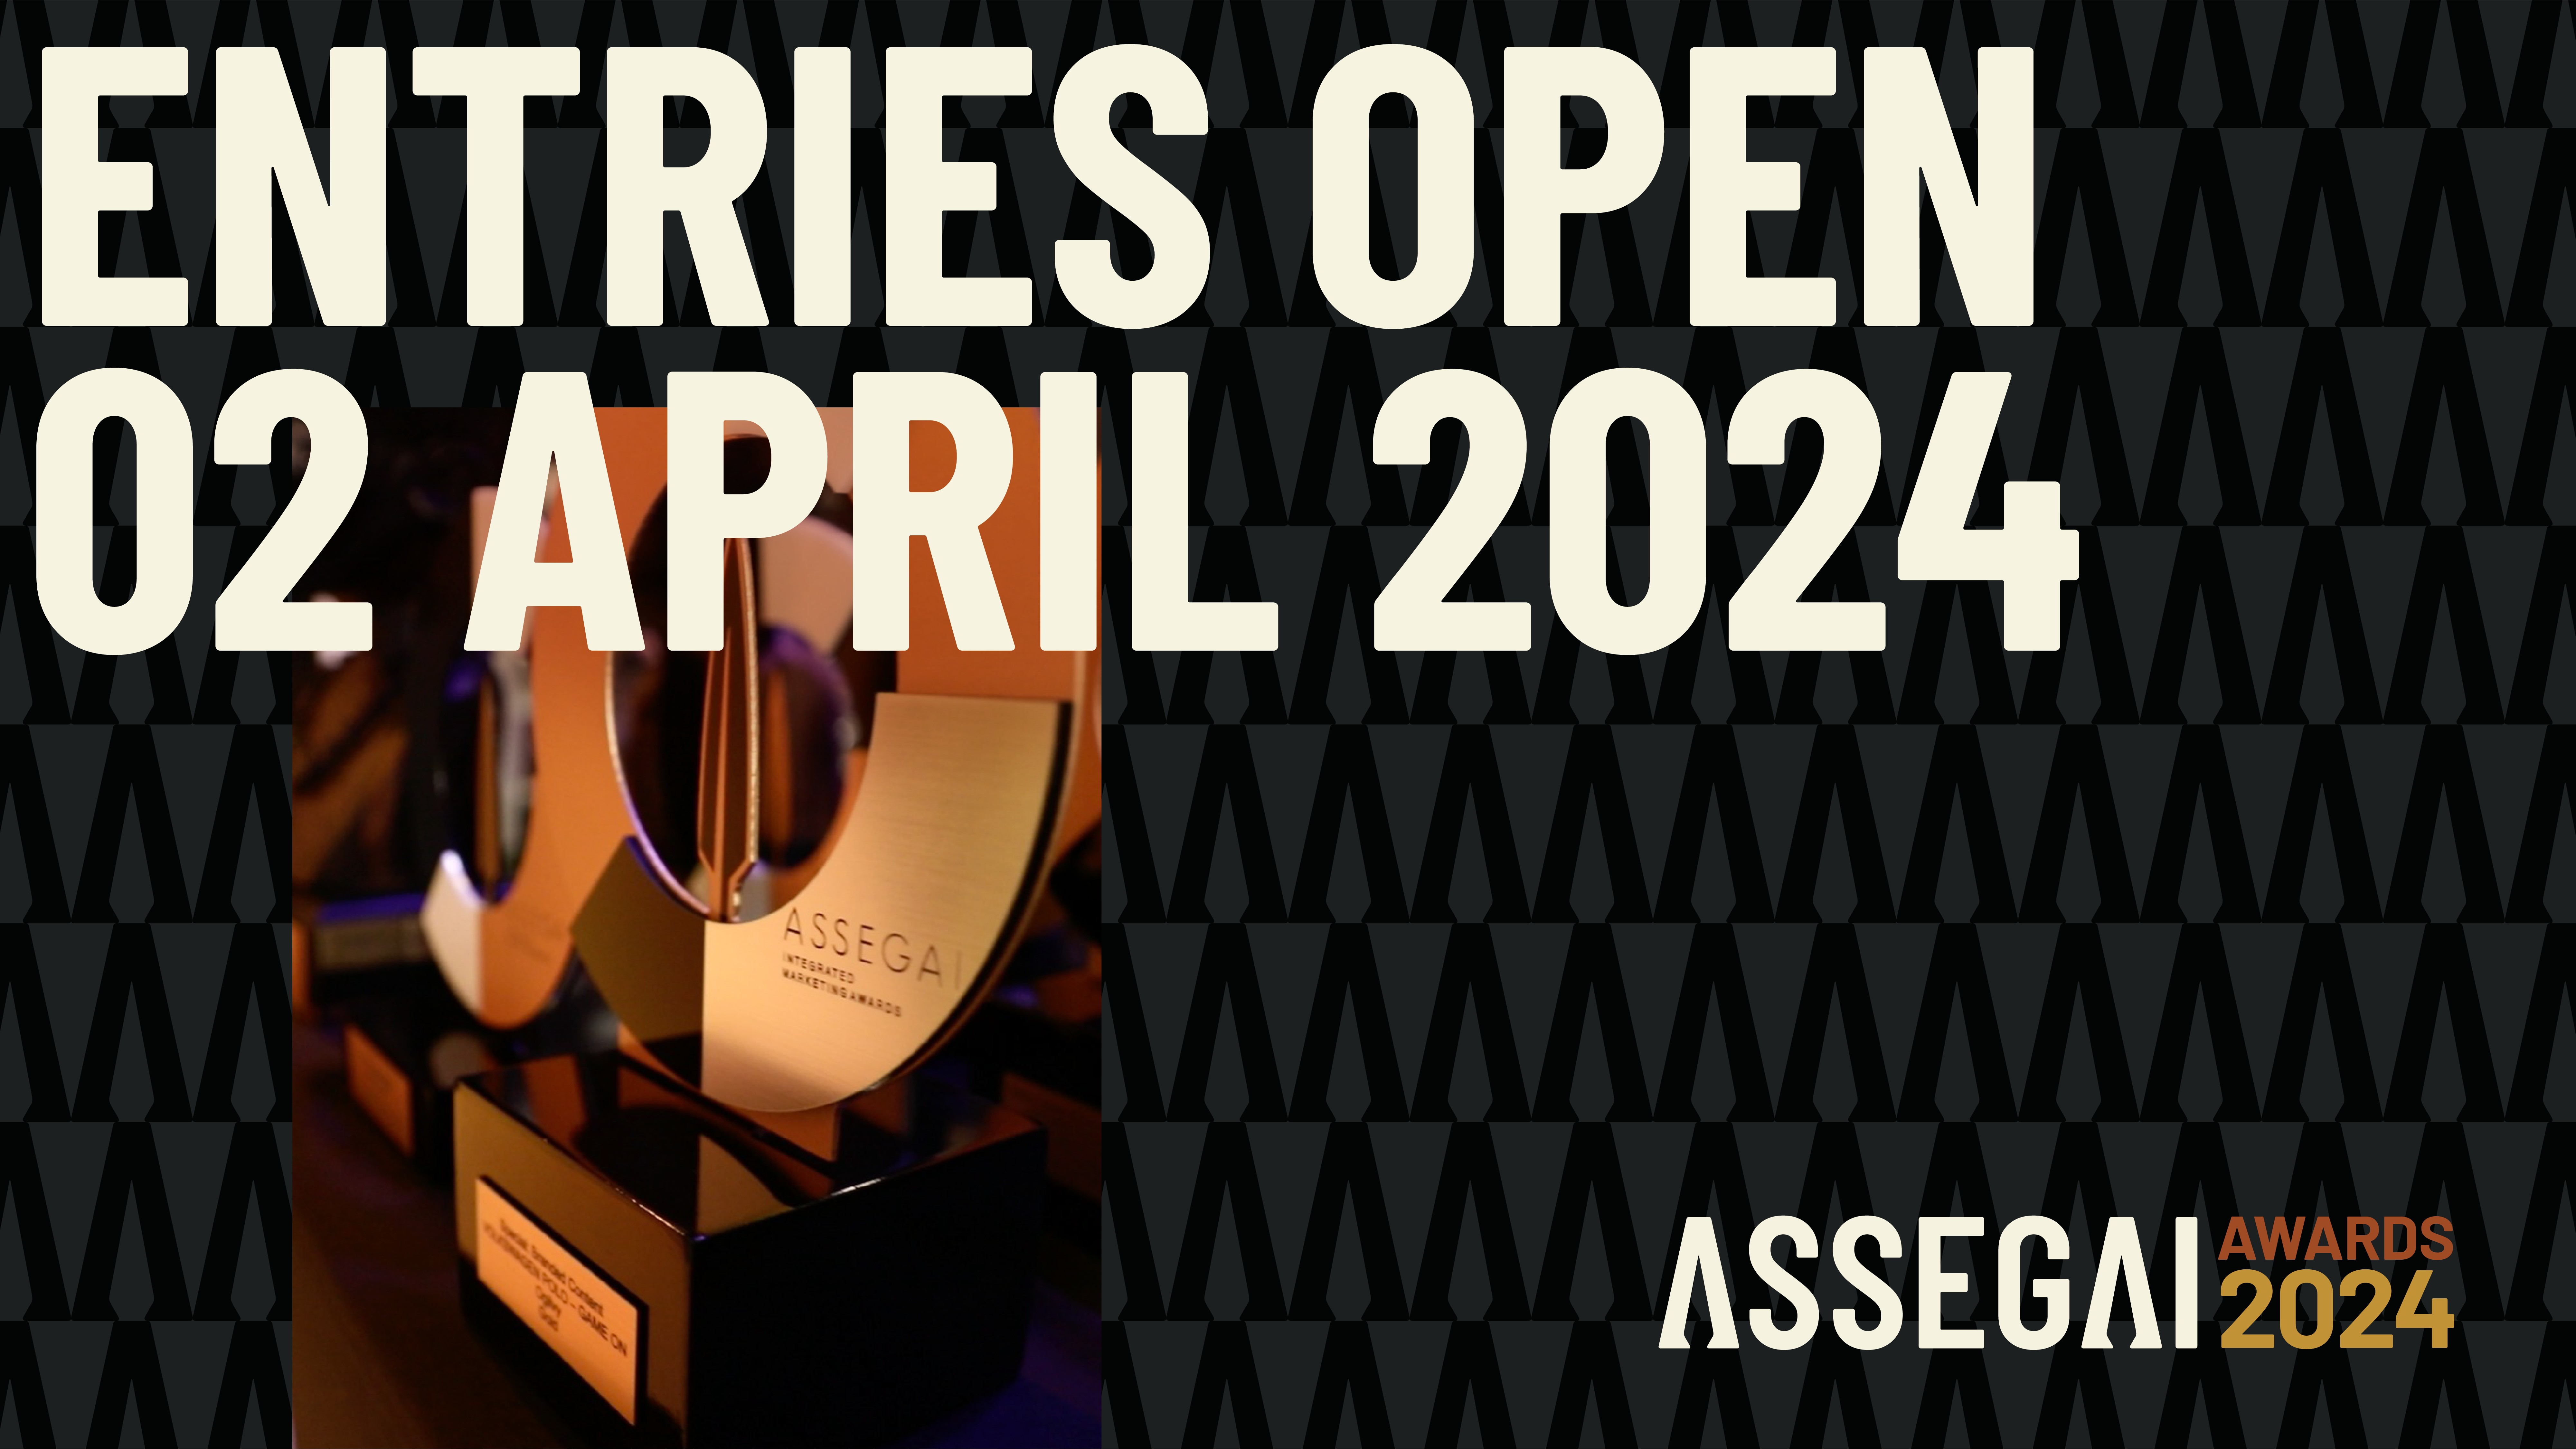 Assegai Awards banner image 2022